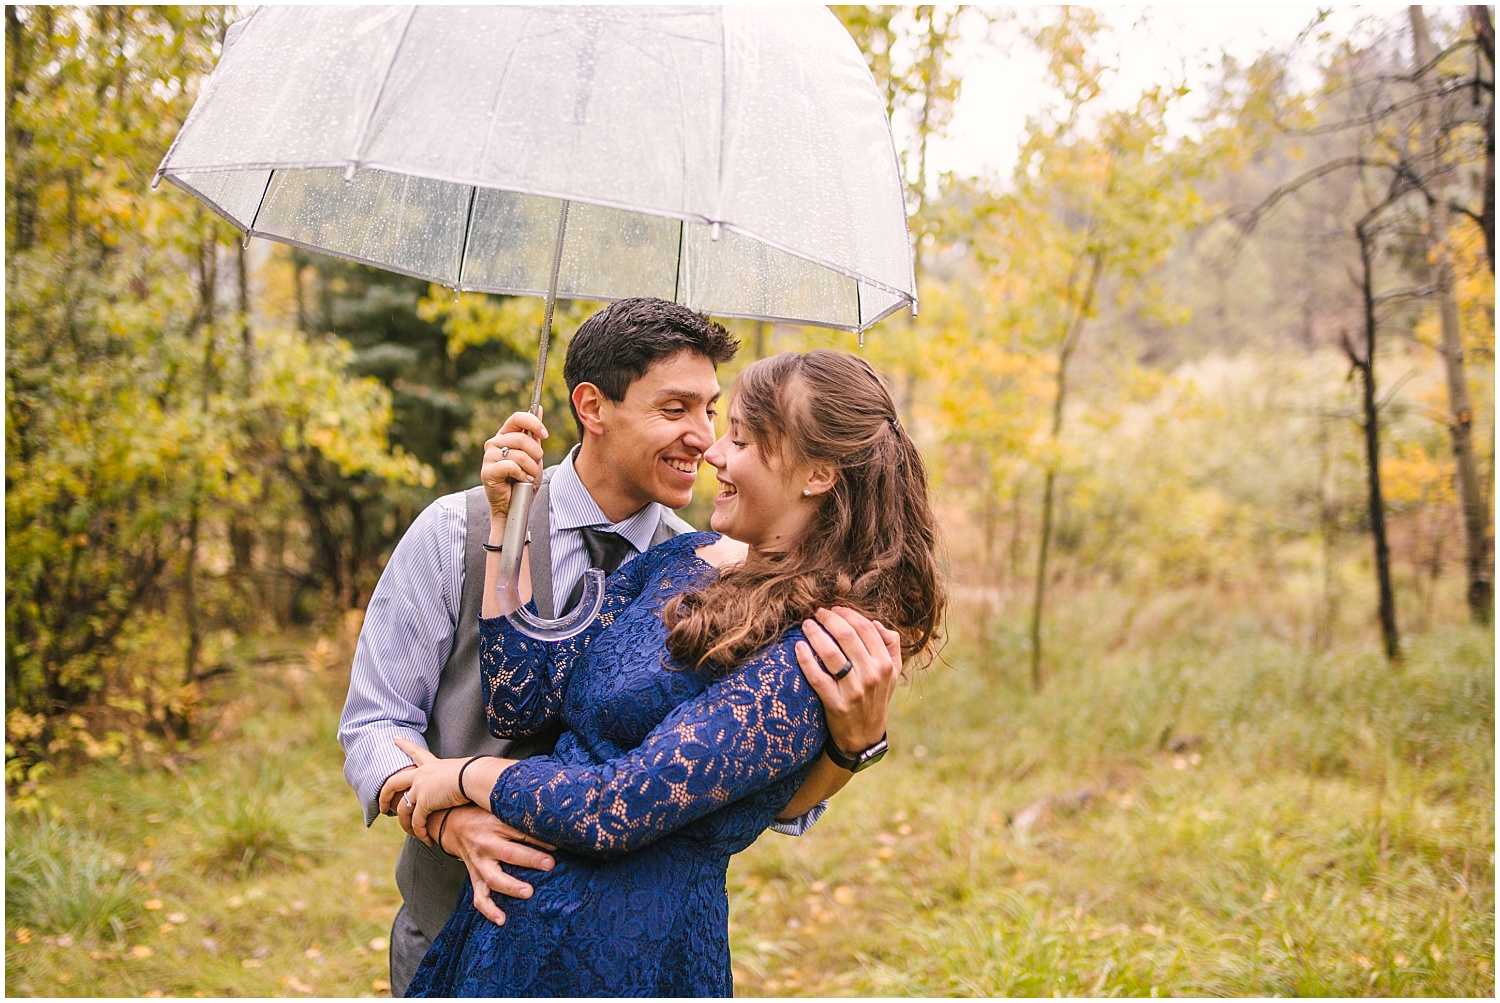 Santa Fe mountain engagement photos on a rainy fall day